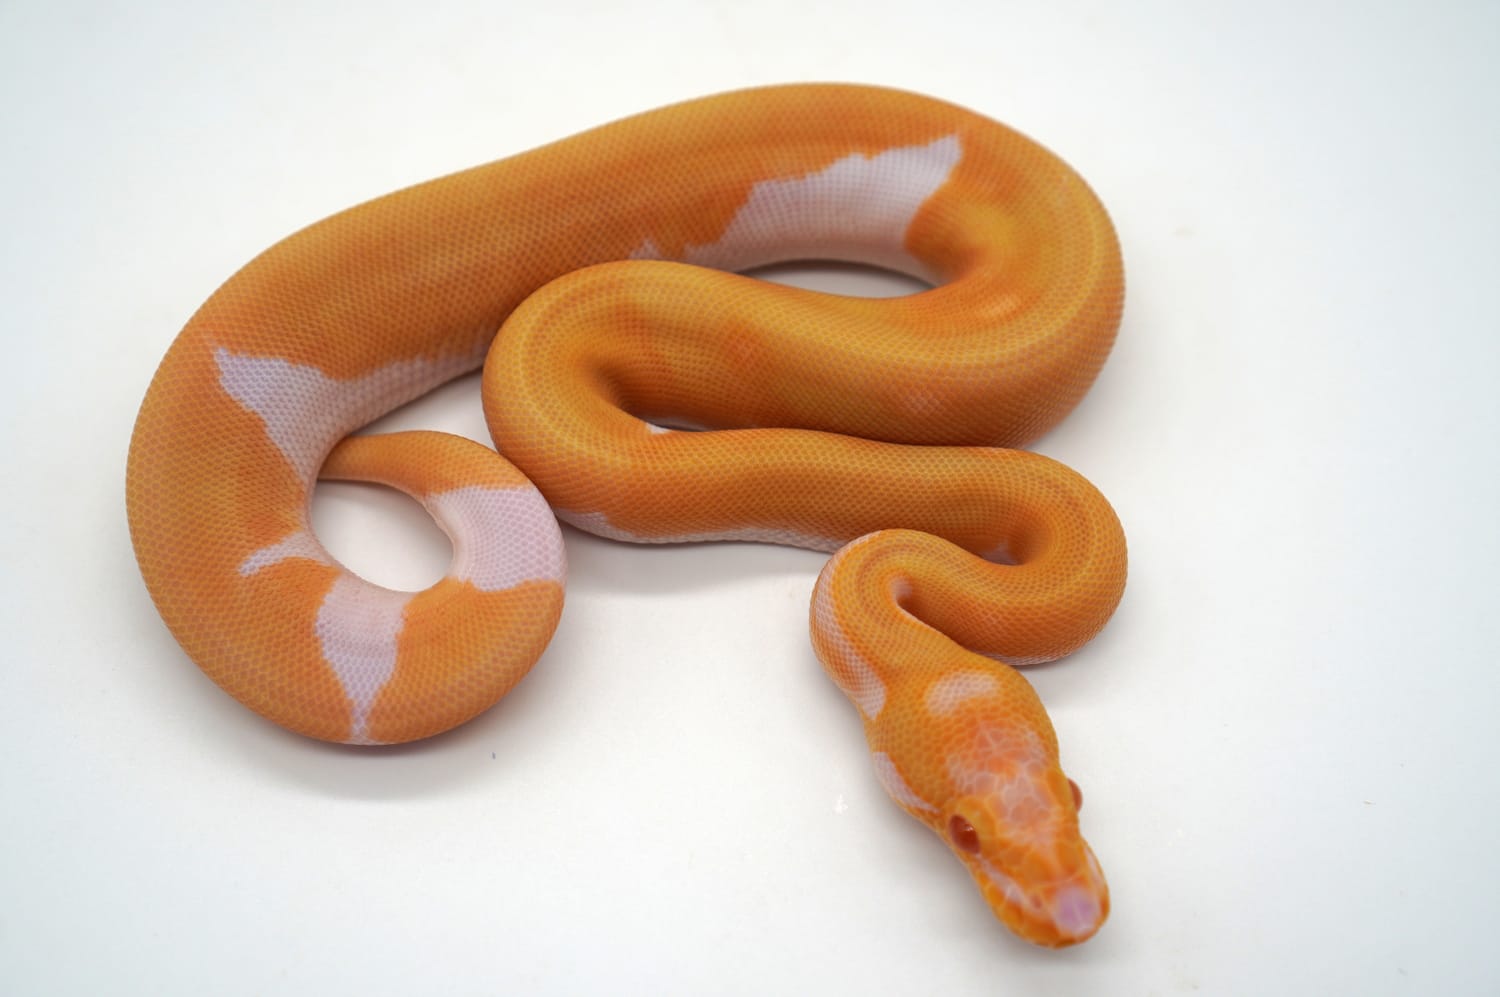 Super Orange Dream YB Enchi Leopard Pastel Candino Pied Ball Python by Ozzy Boids LLC